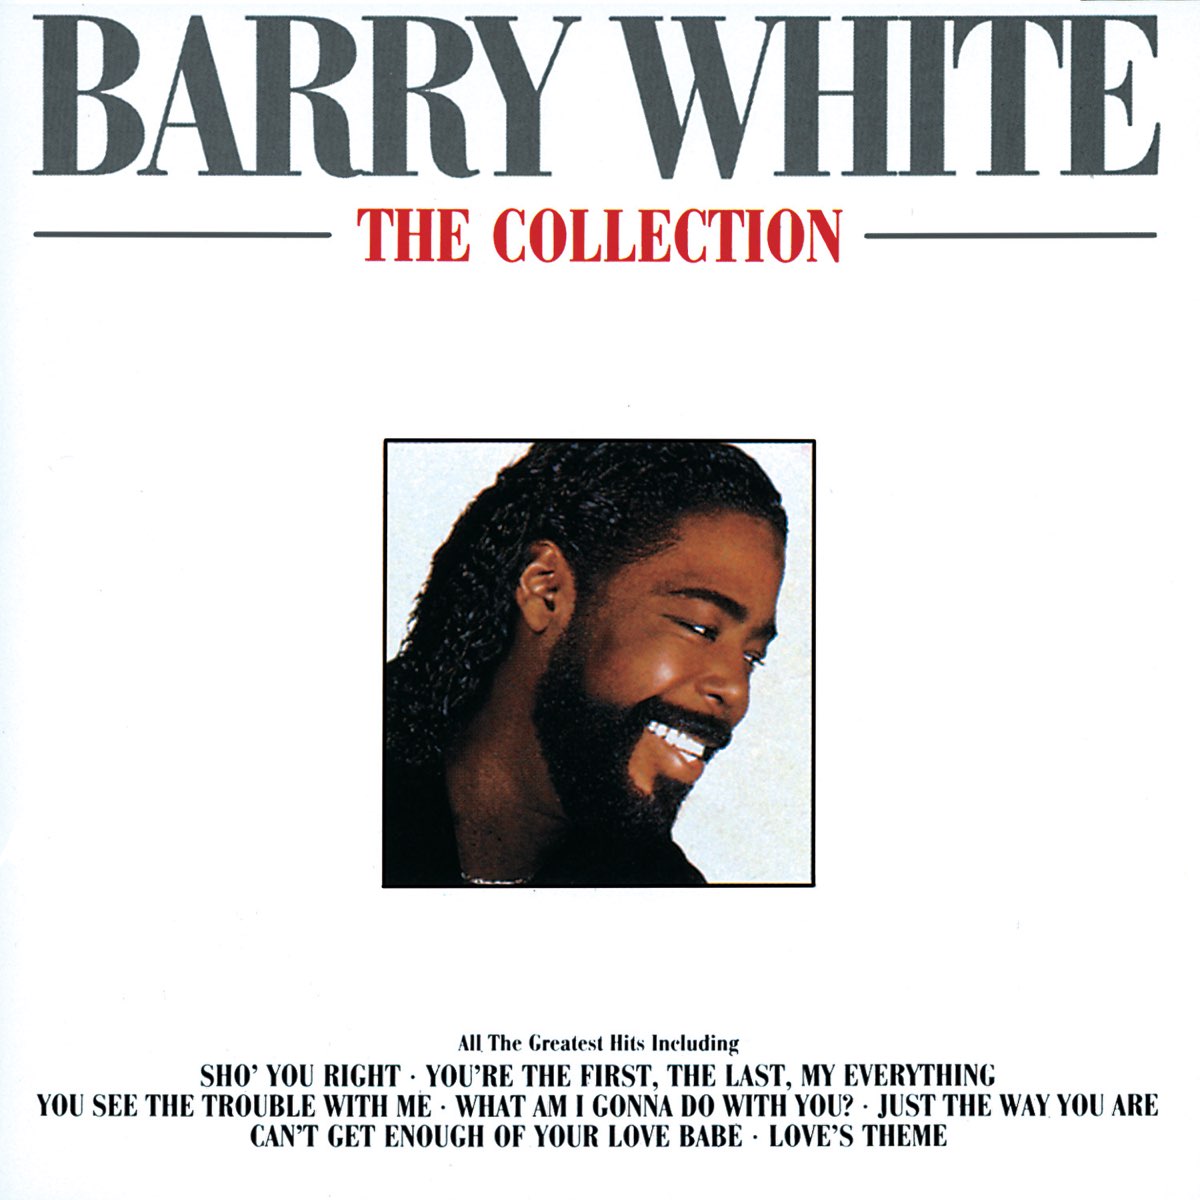 Barry White - The Collection par Barry White sur Apple Music